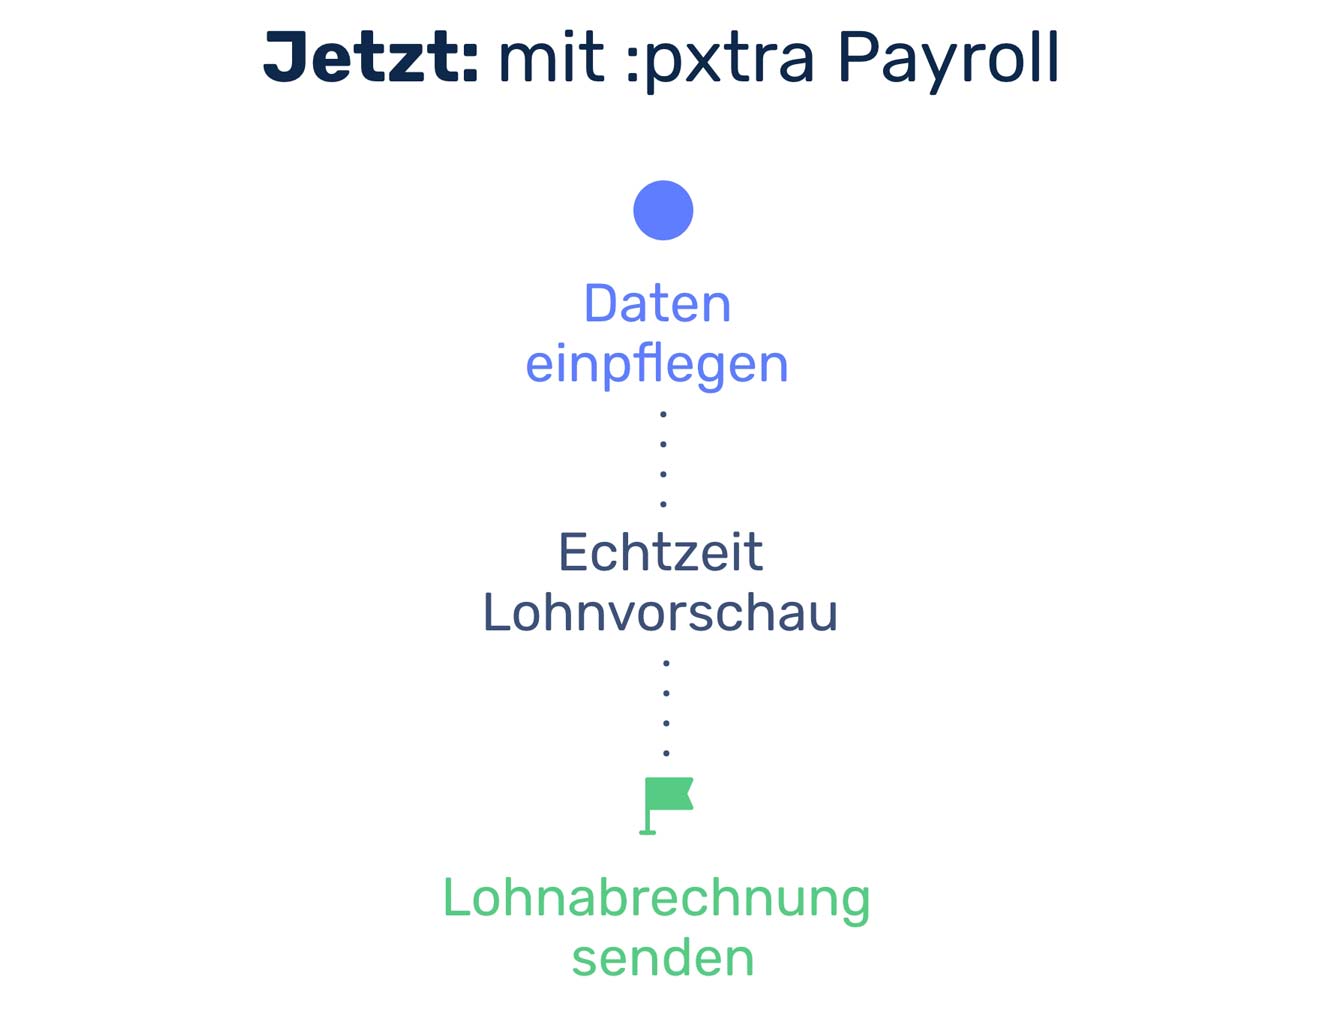 Prozess mit :pxtra Payroll